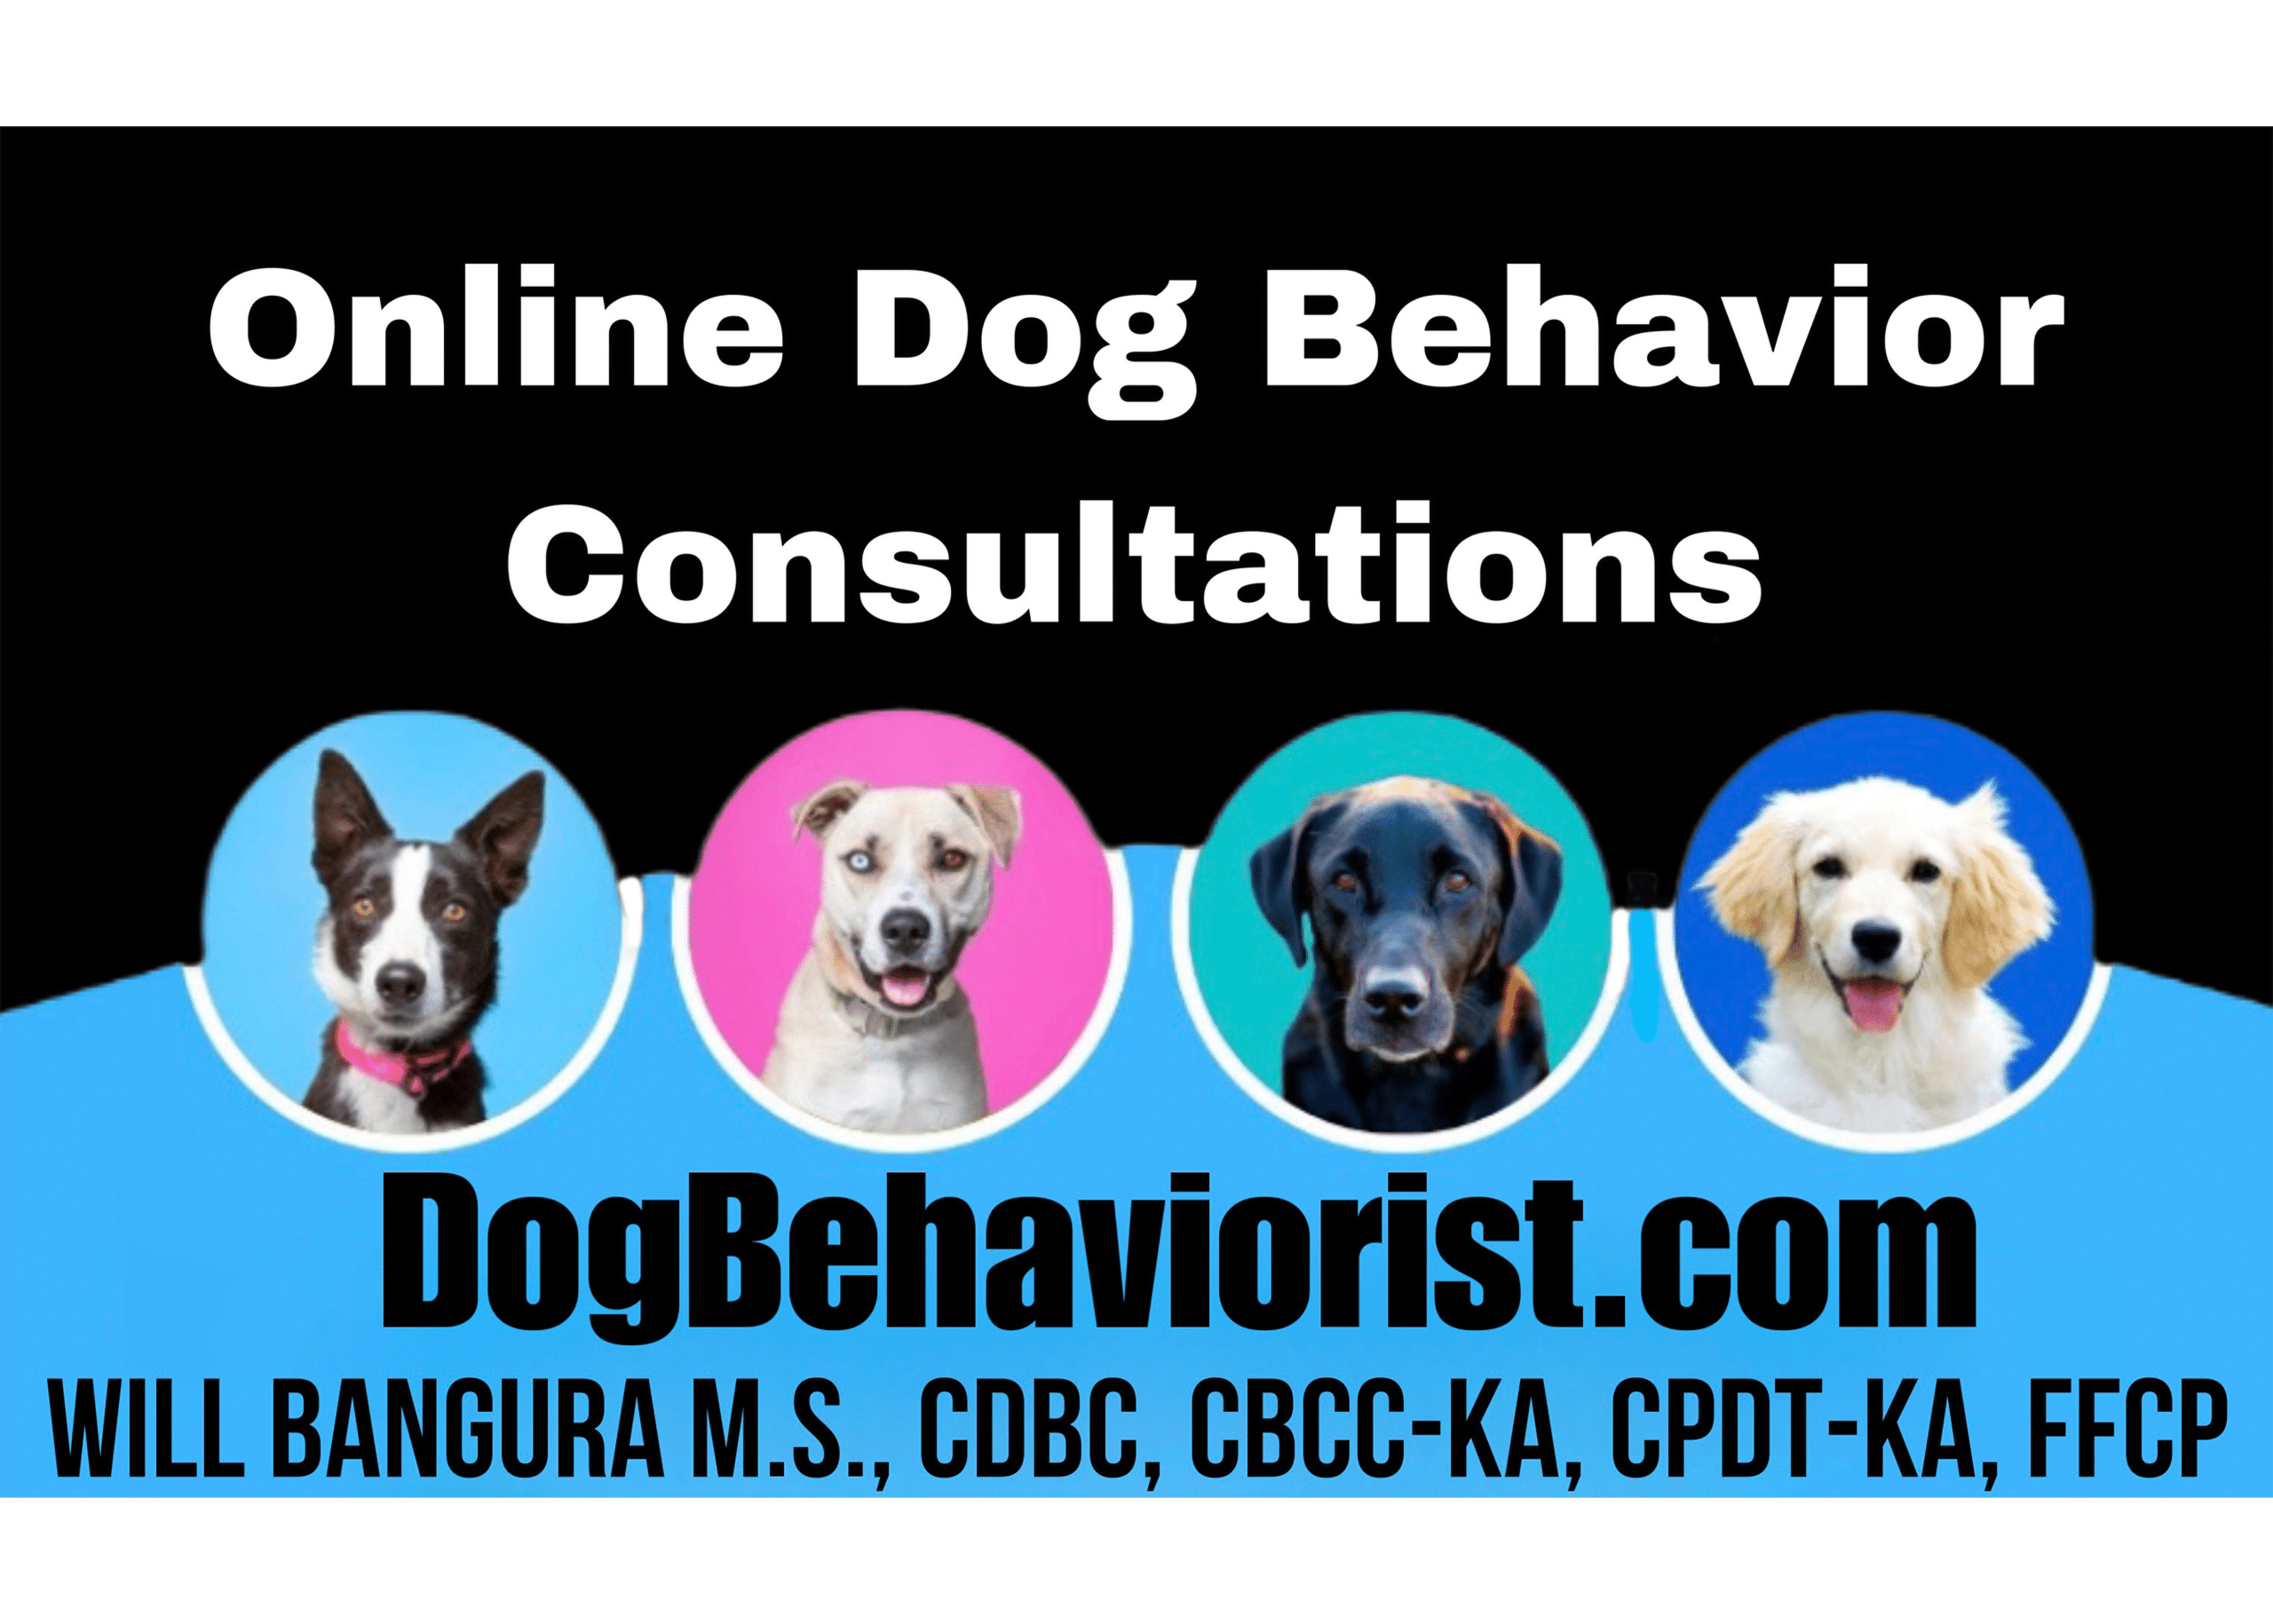 Dog-Behaviorist-Consutations